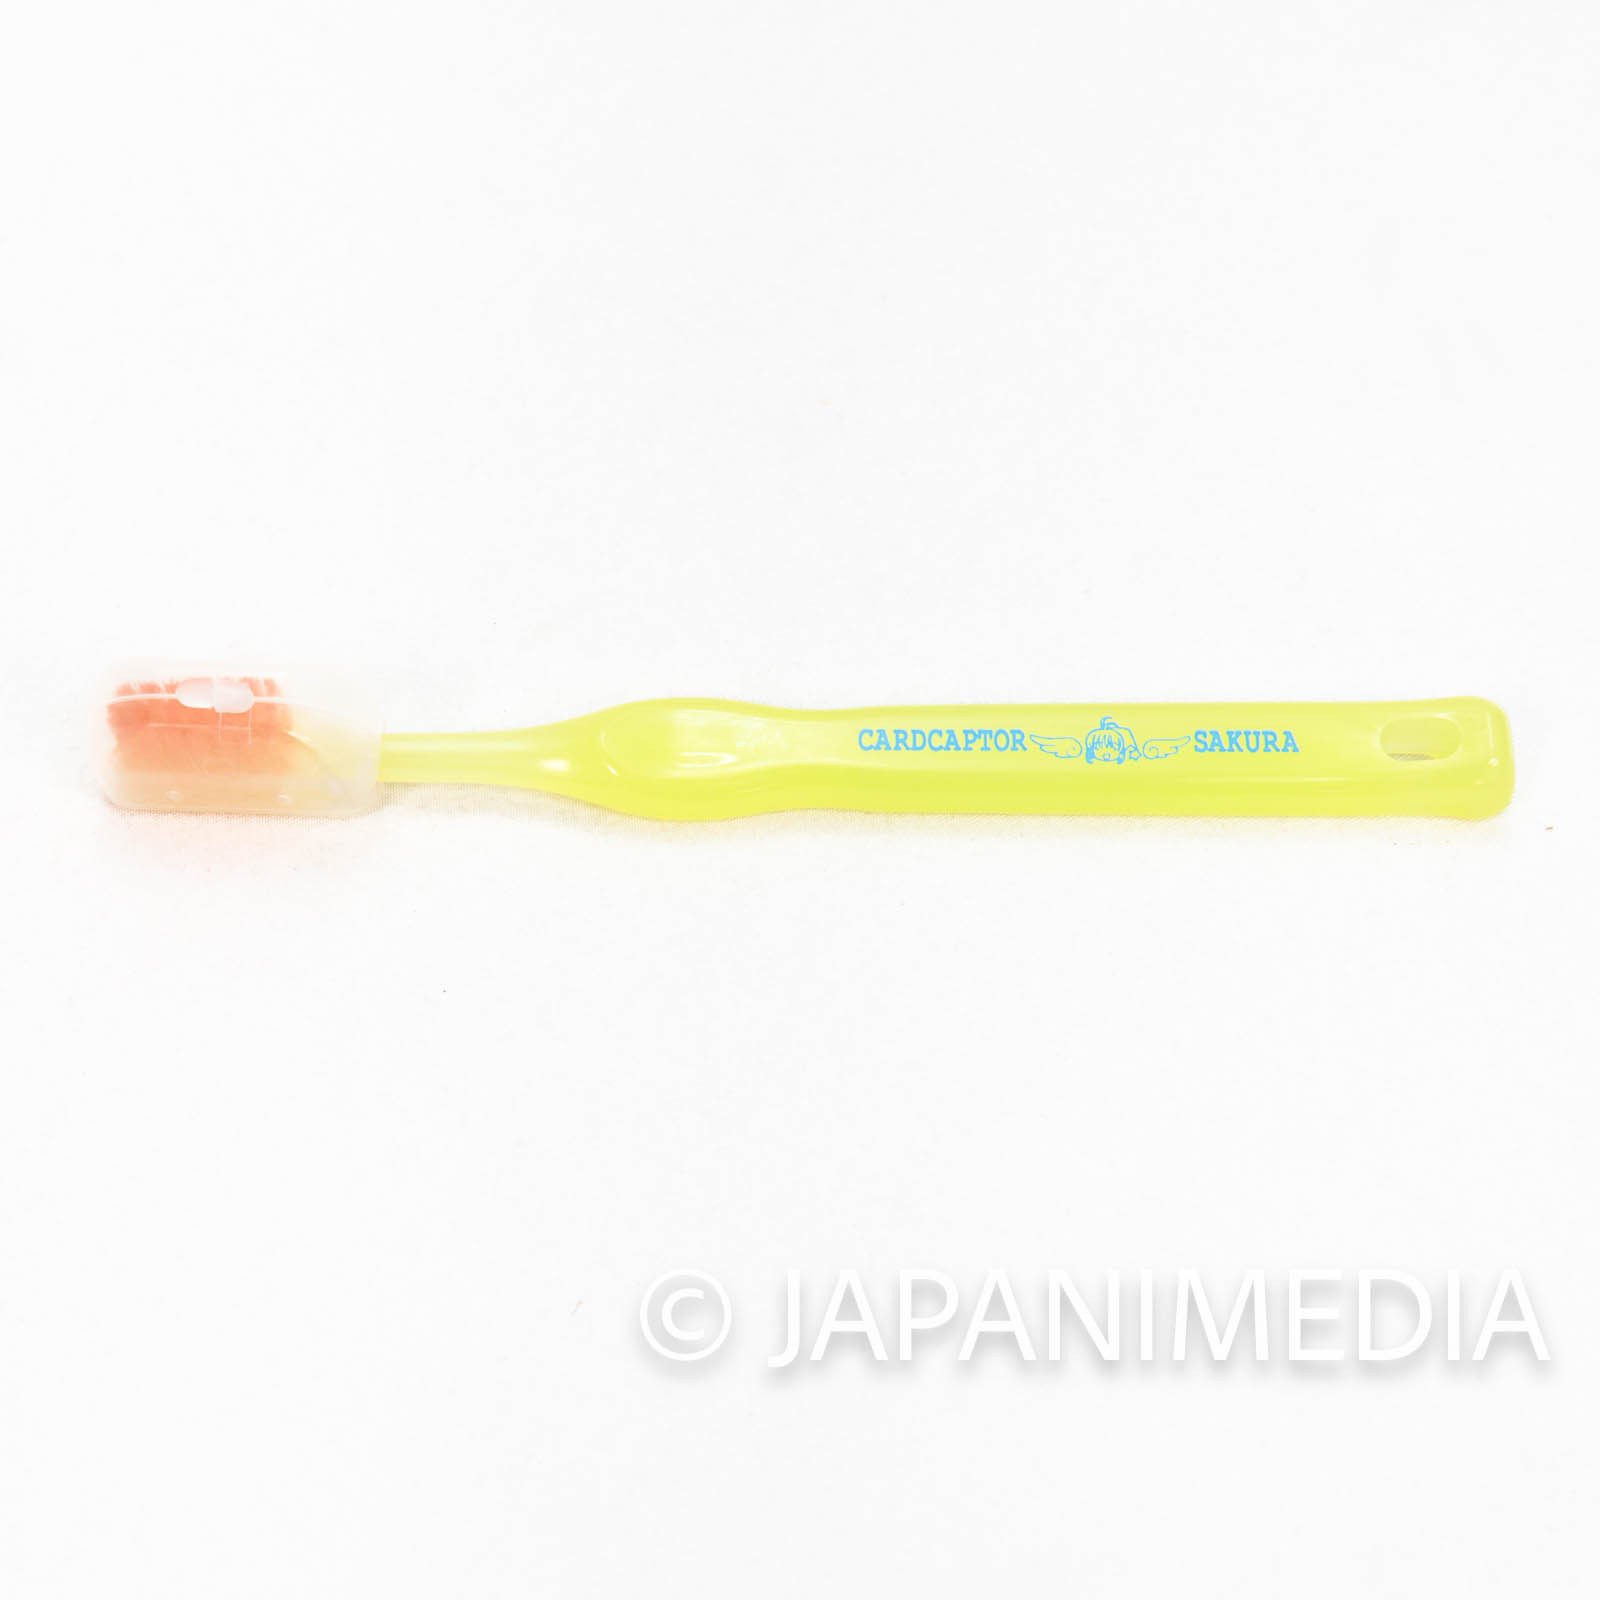 Cardcaptor Sakura Grooming Set [Clear Pouch Bag / Mini Towel / Toothbrush / Sponge]